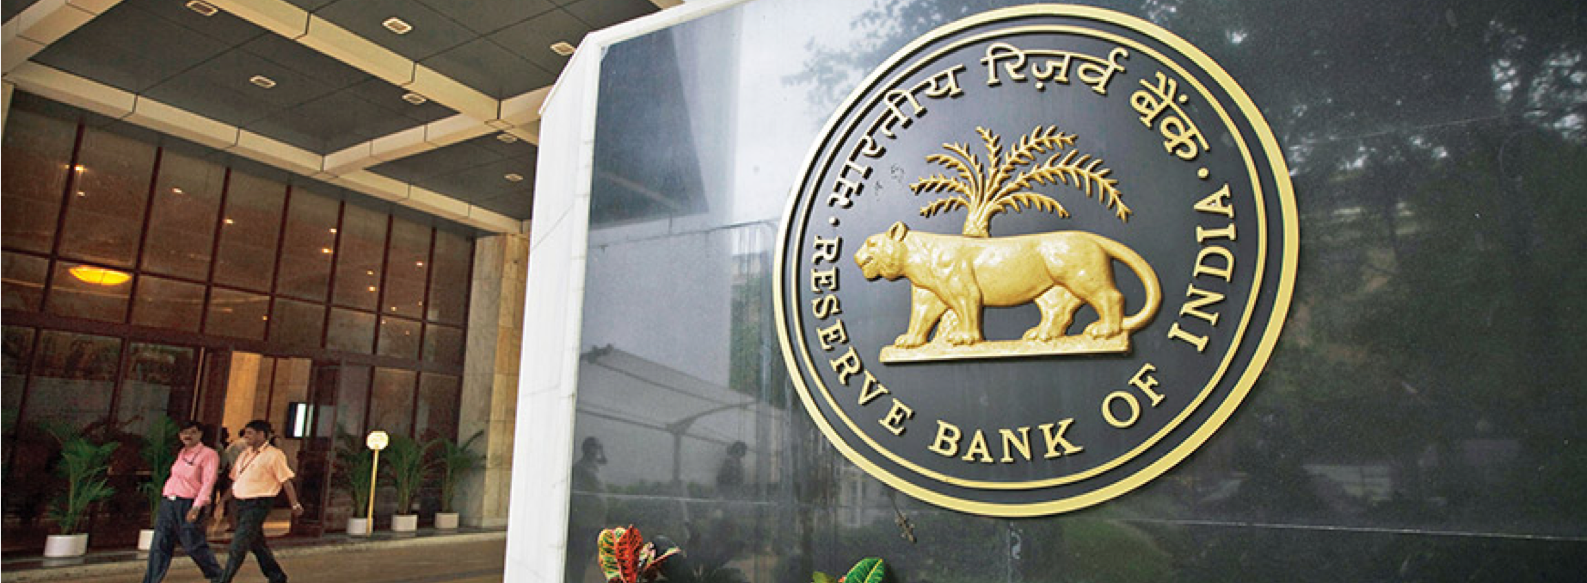 Bank of India image